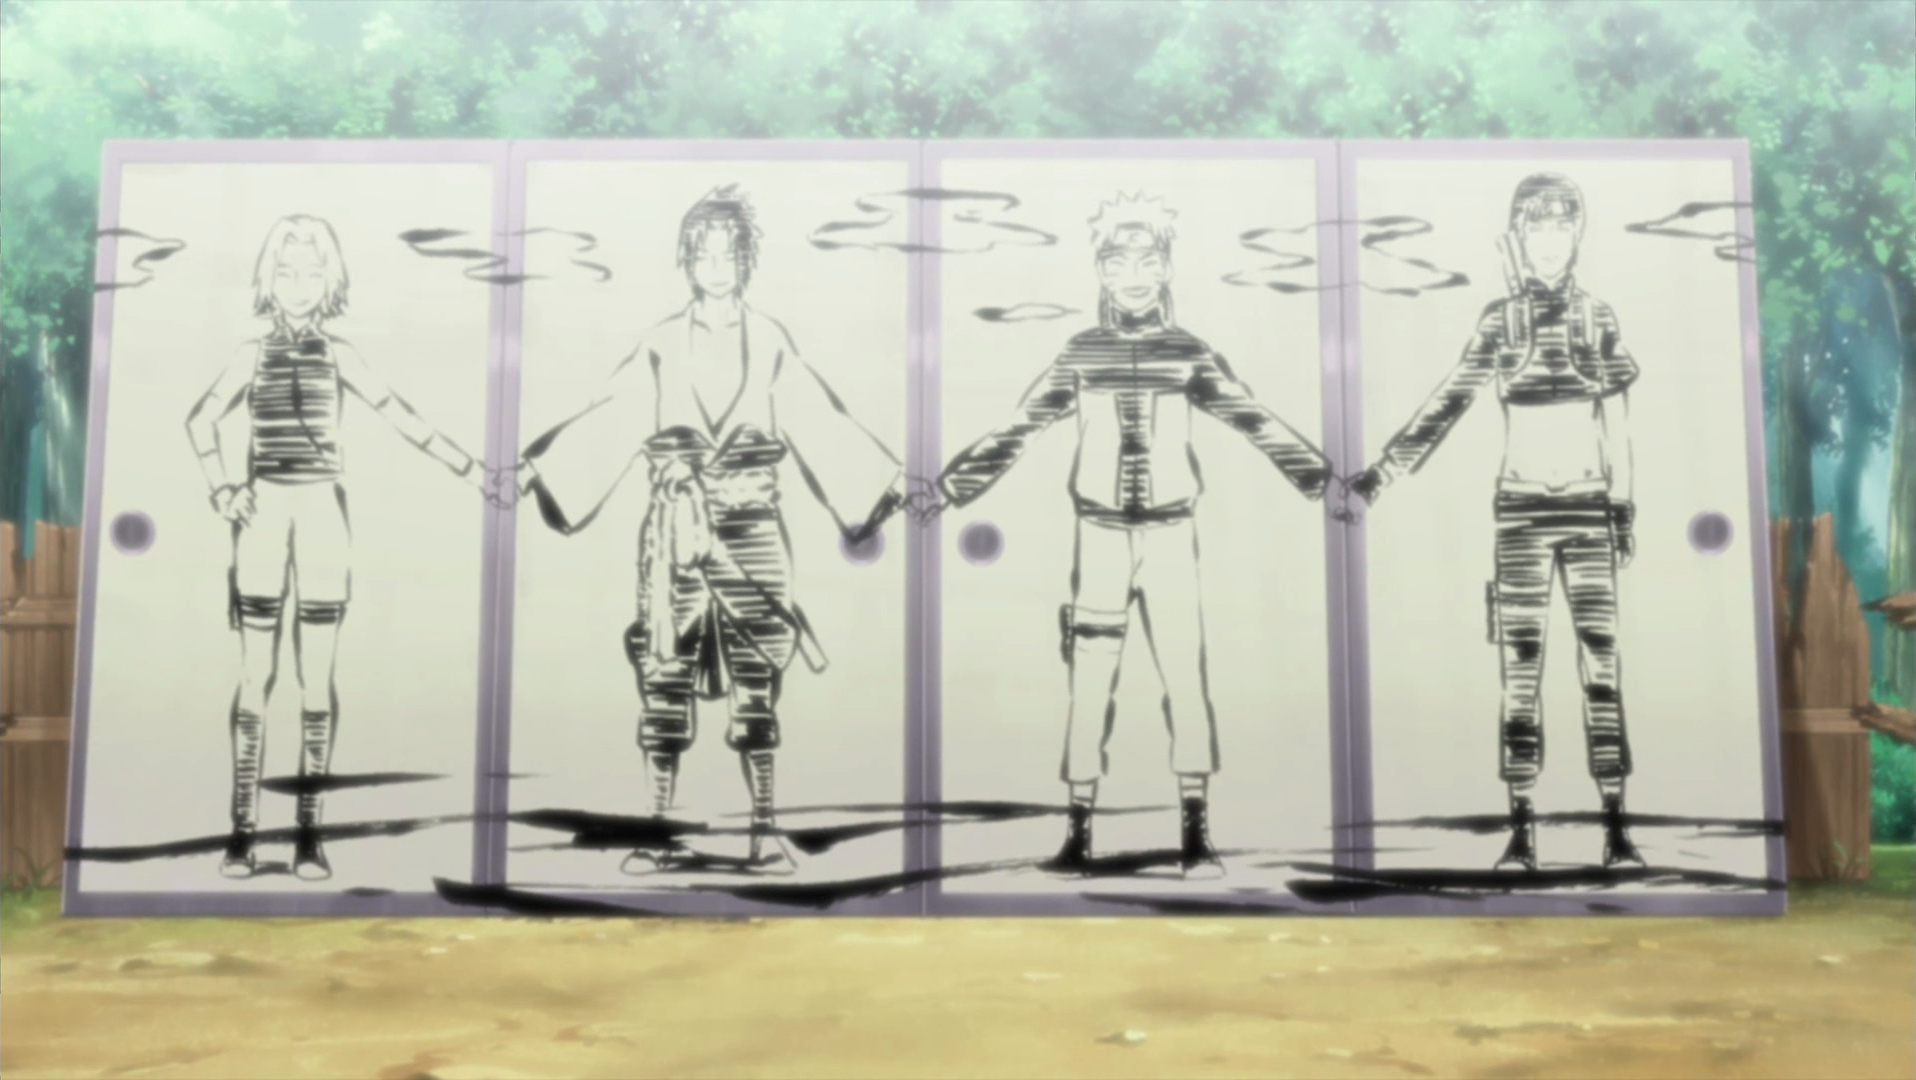 Was putting Sasuke and Naruto on Team 7 together a good idea? - Quora